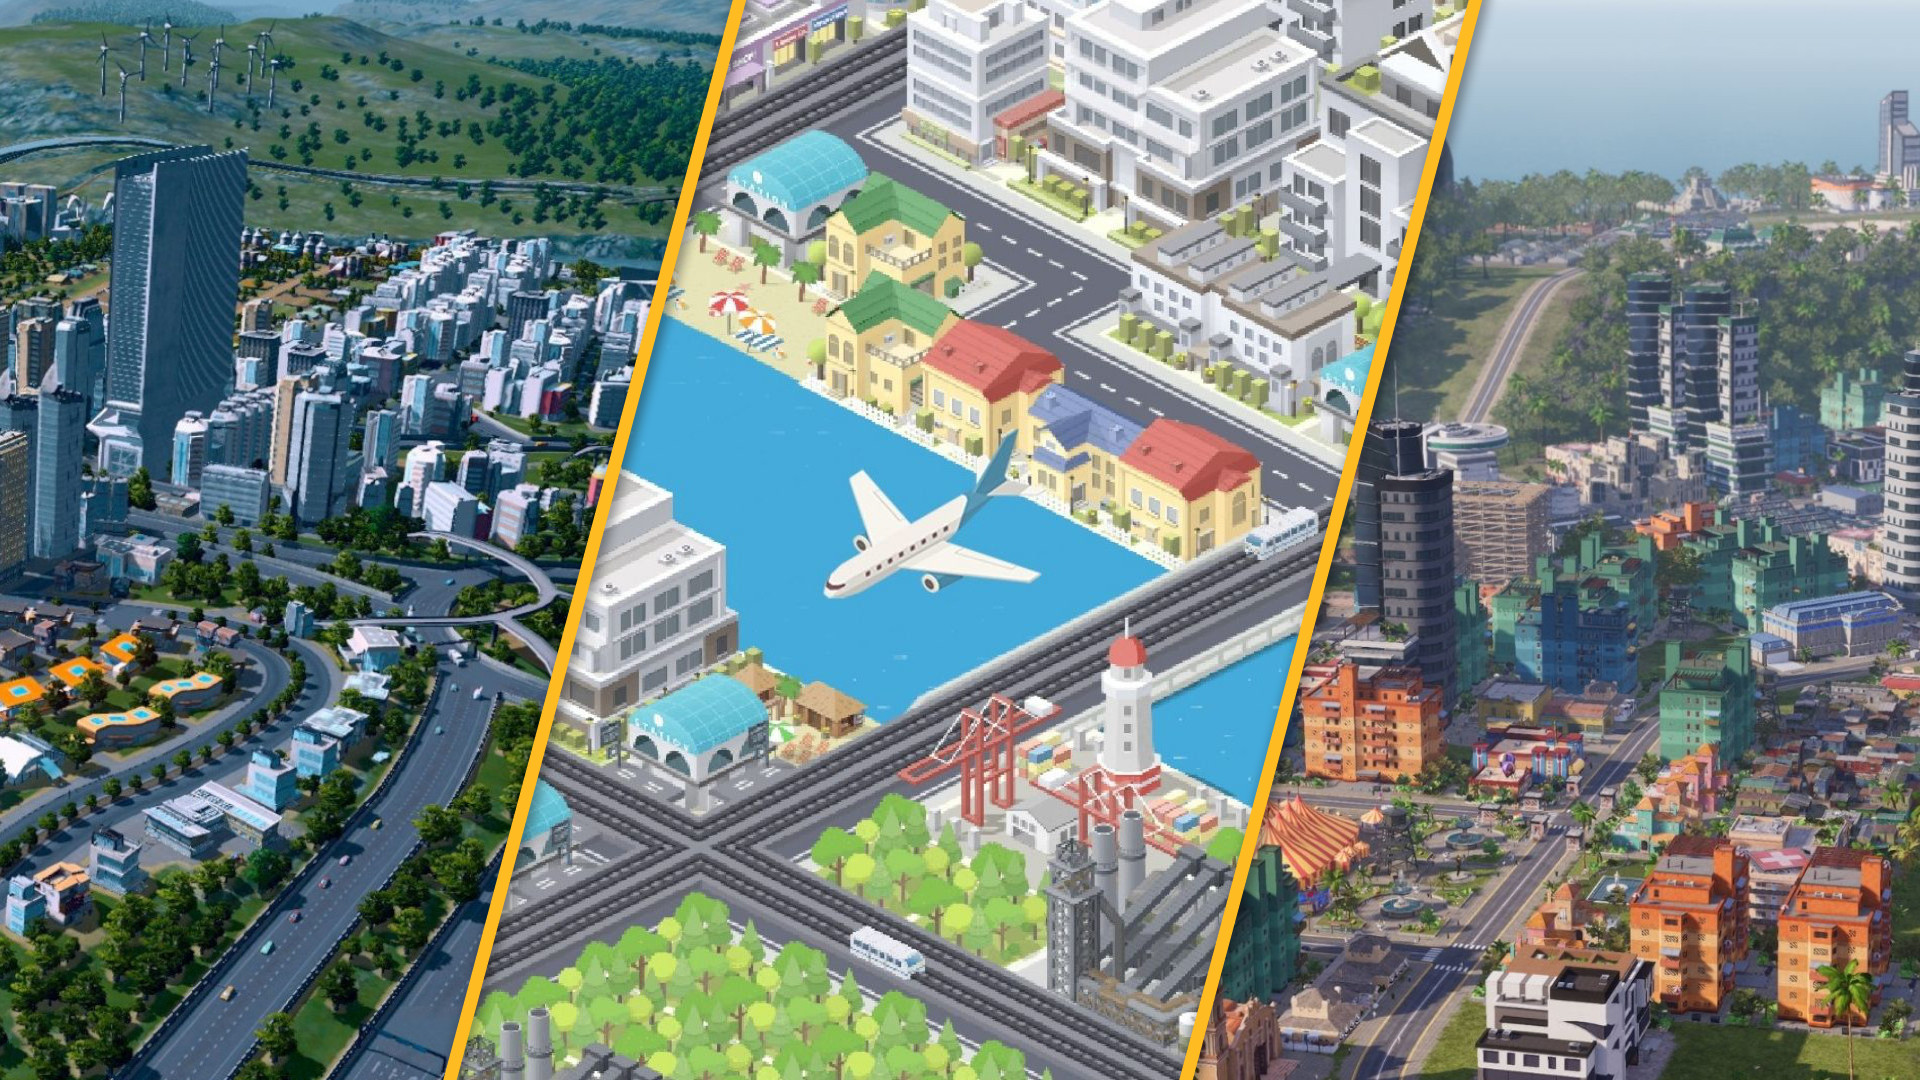 Best City Building games of 2020 